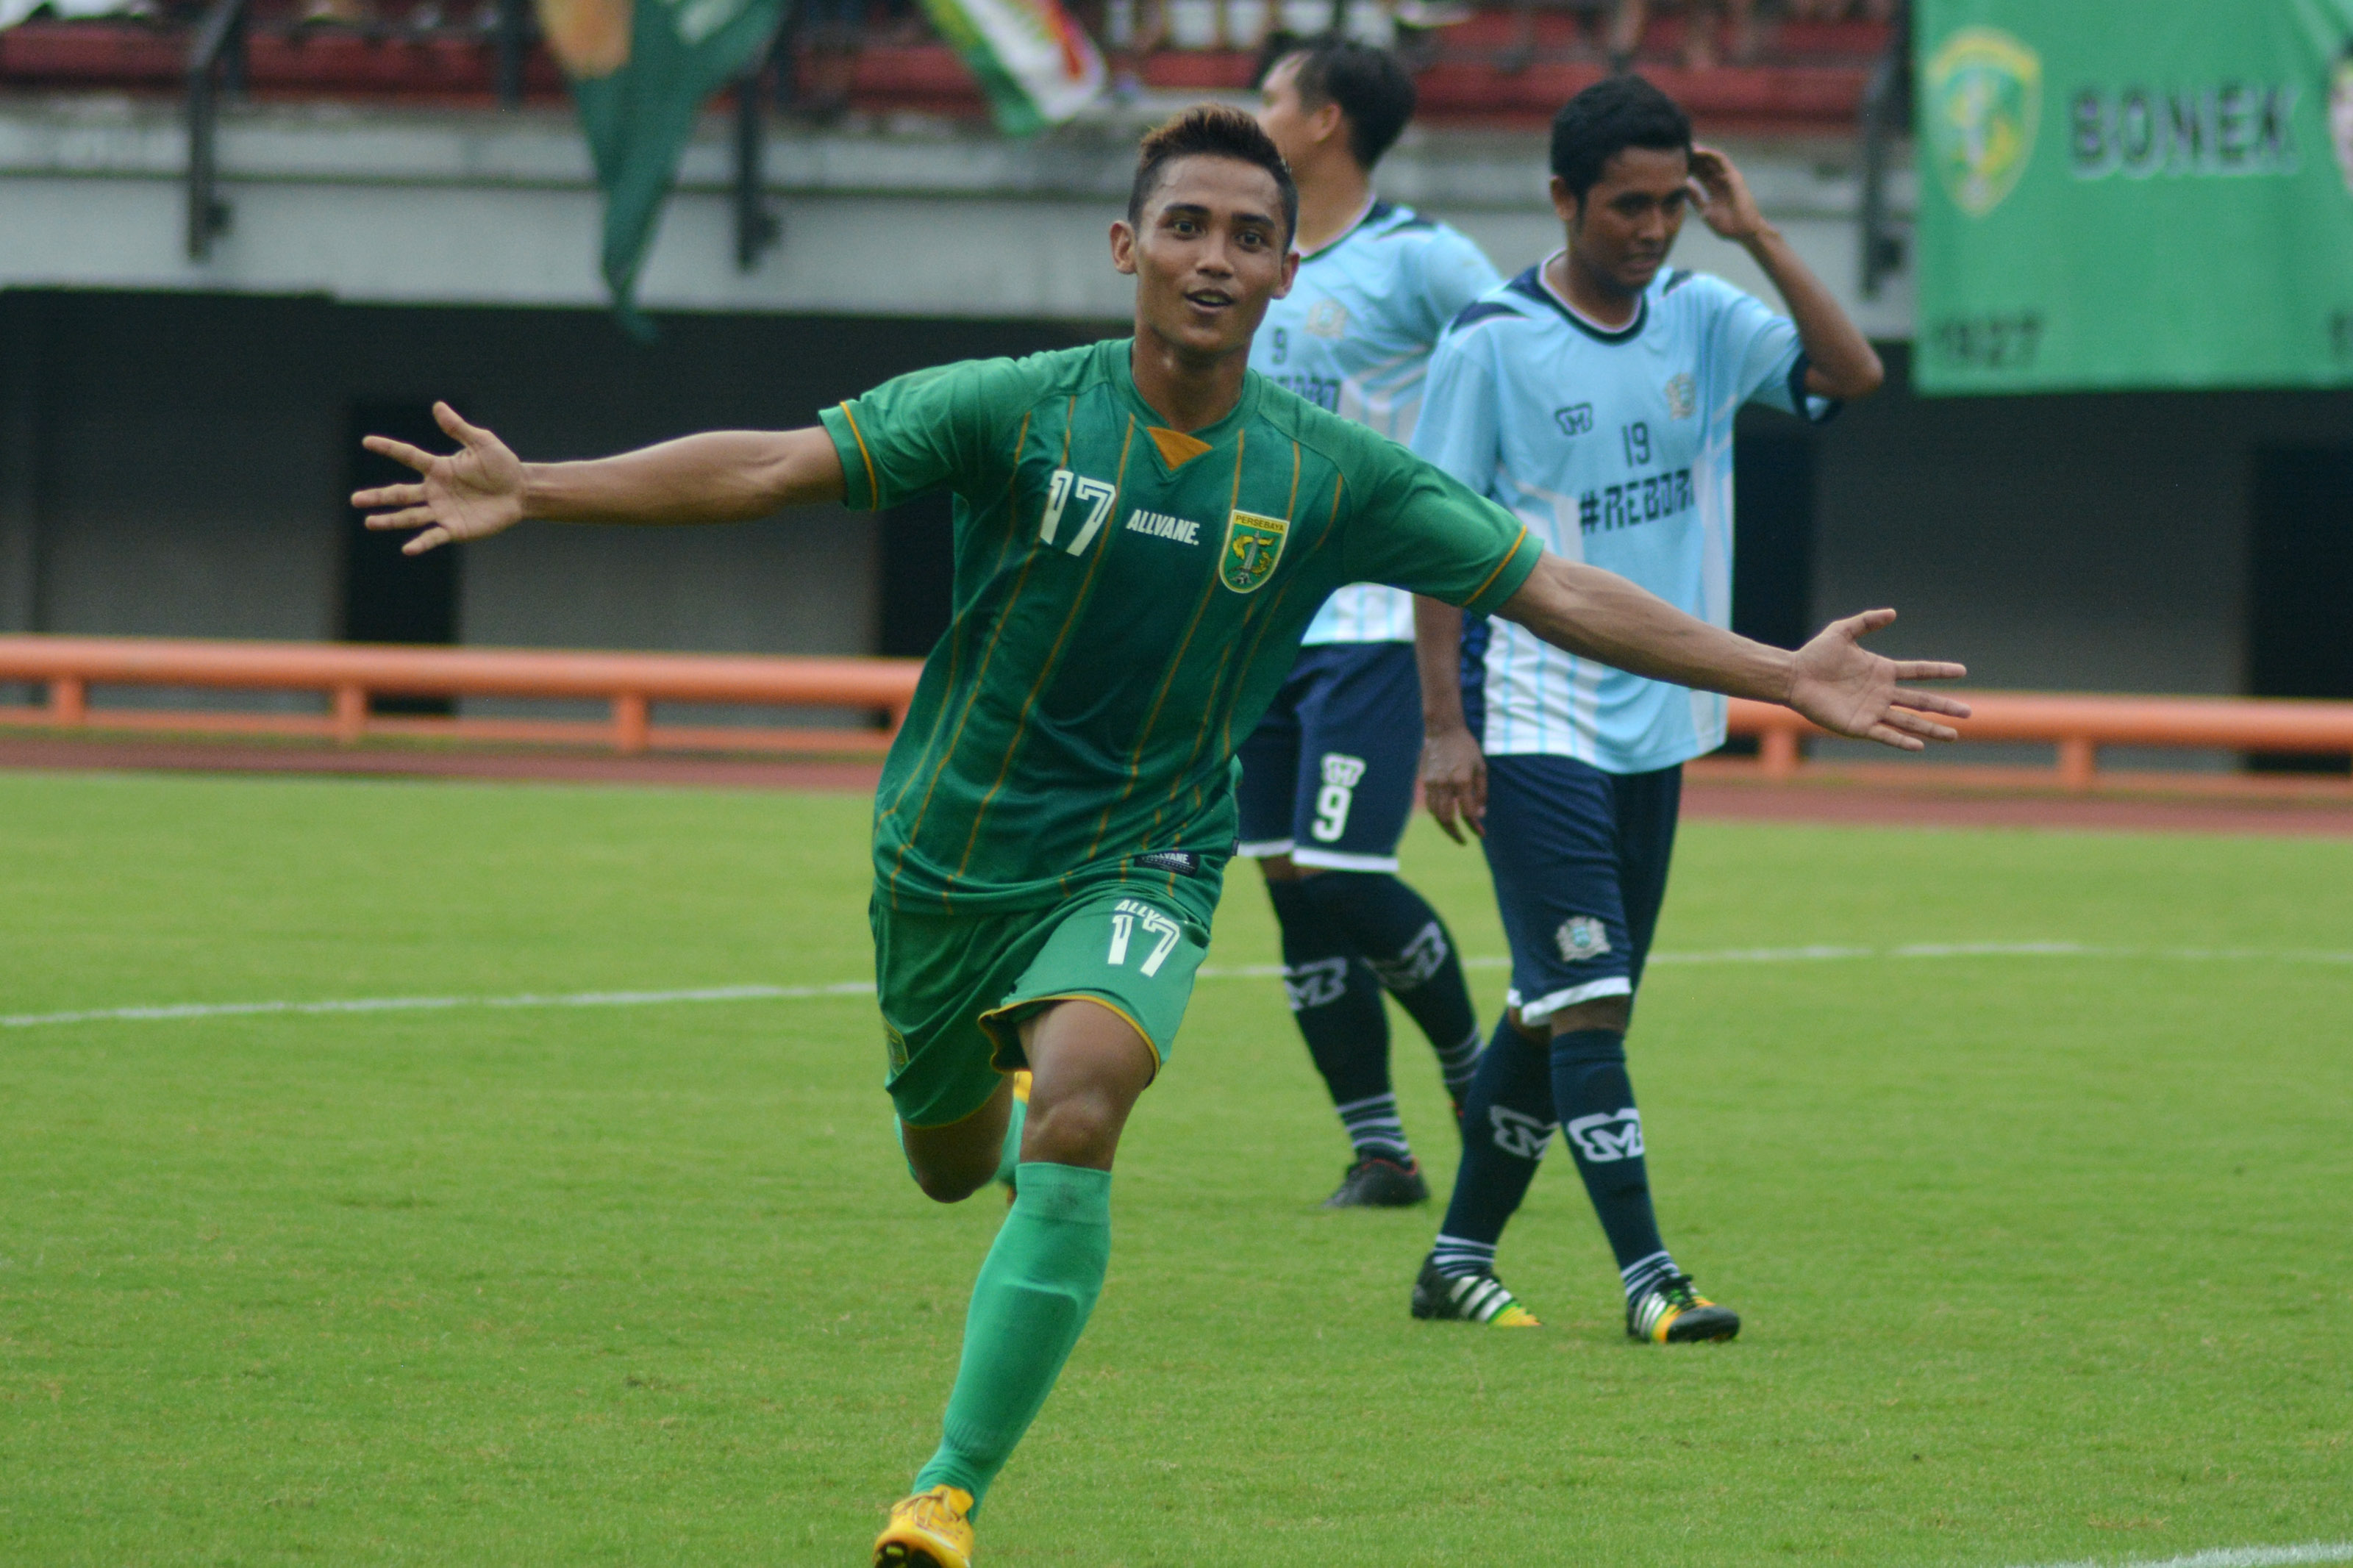 Pesepak bola Persebaya Surabaya, Taufan, melakukan selebrasi usai mencetak gol. Turnamen Internal Persebaya merupakan salah satu pencetak bibit unggul. Foto oleh Umarul Faruq/Antara 